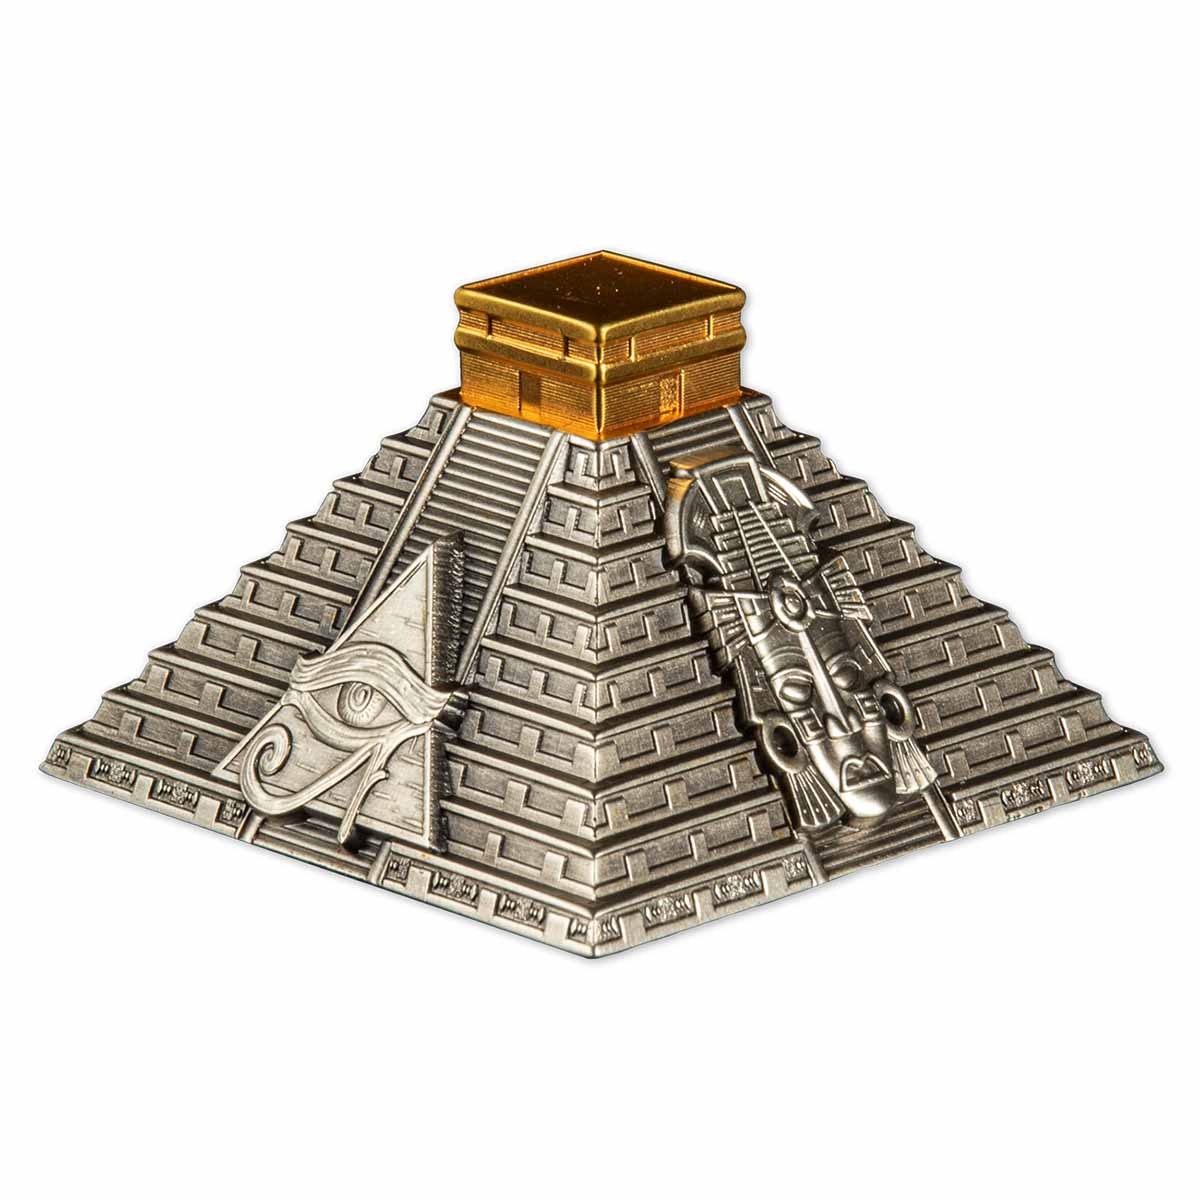 Chichen Itza Pyramid 2022 50 Cordobas 5oz Silver Antiqued Coin